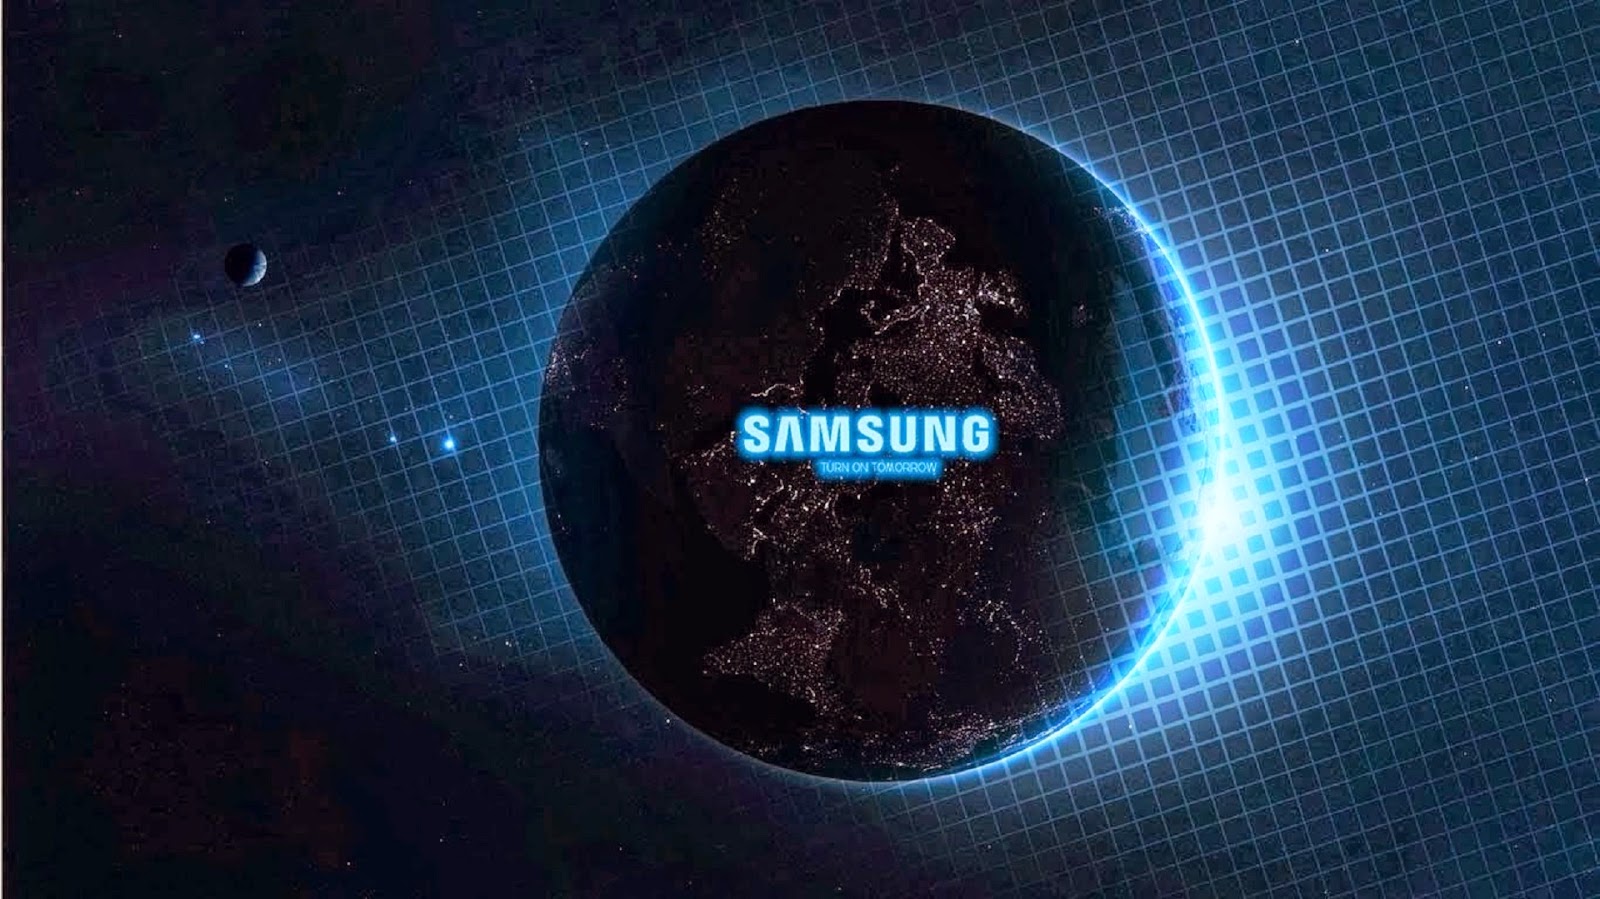 [98+] Samsung Galaxy Logo Wallpapers on WallpaperSafari